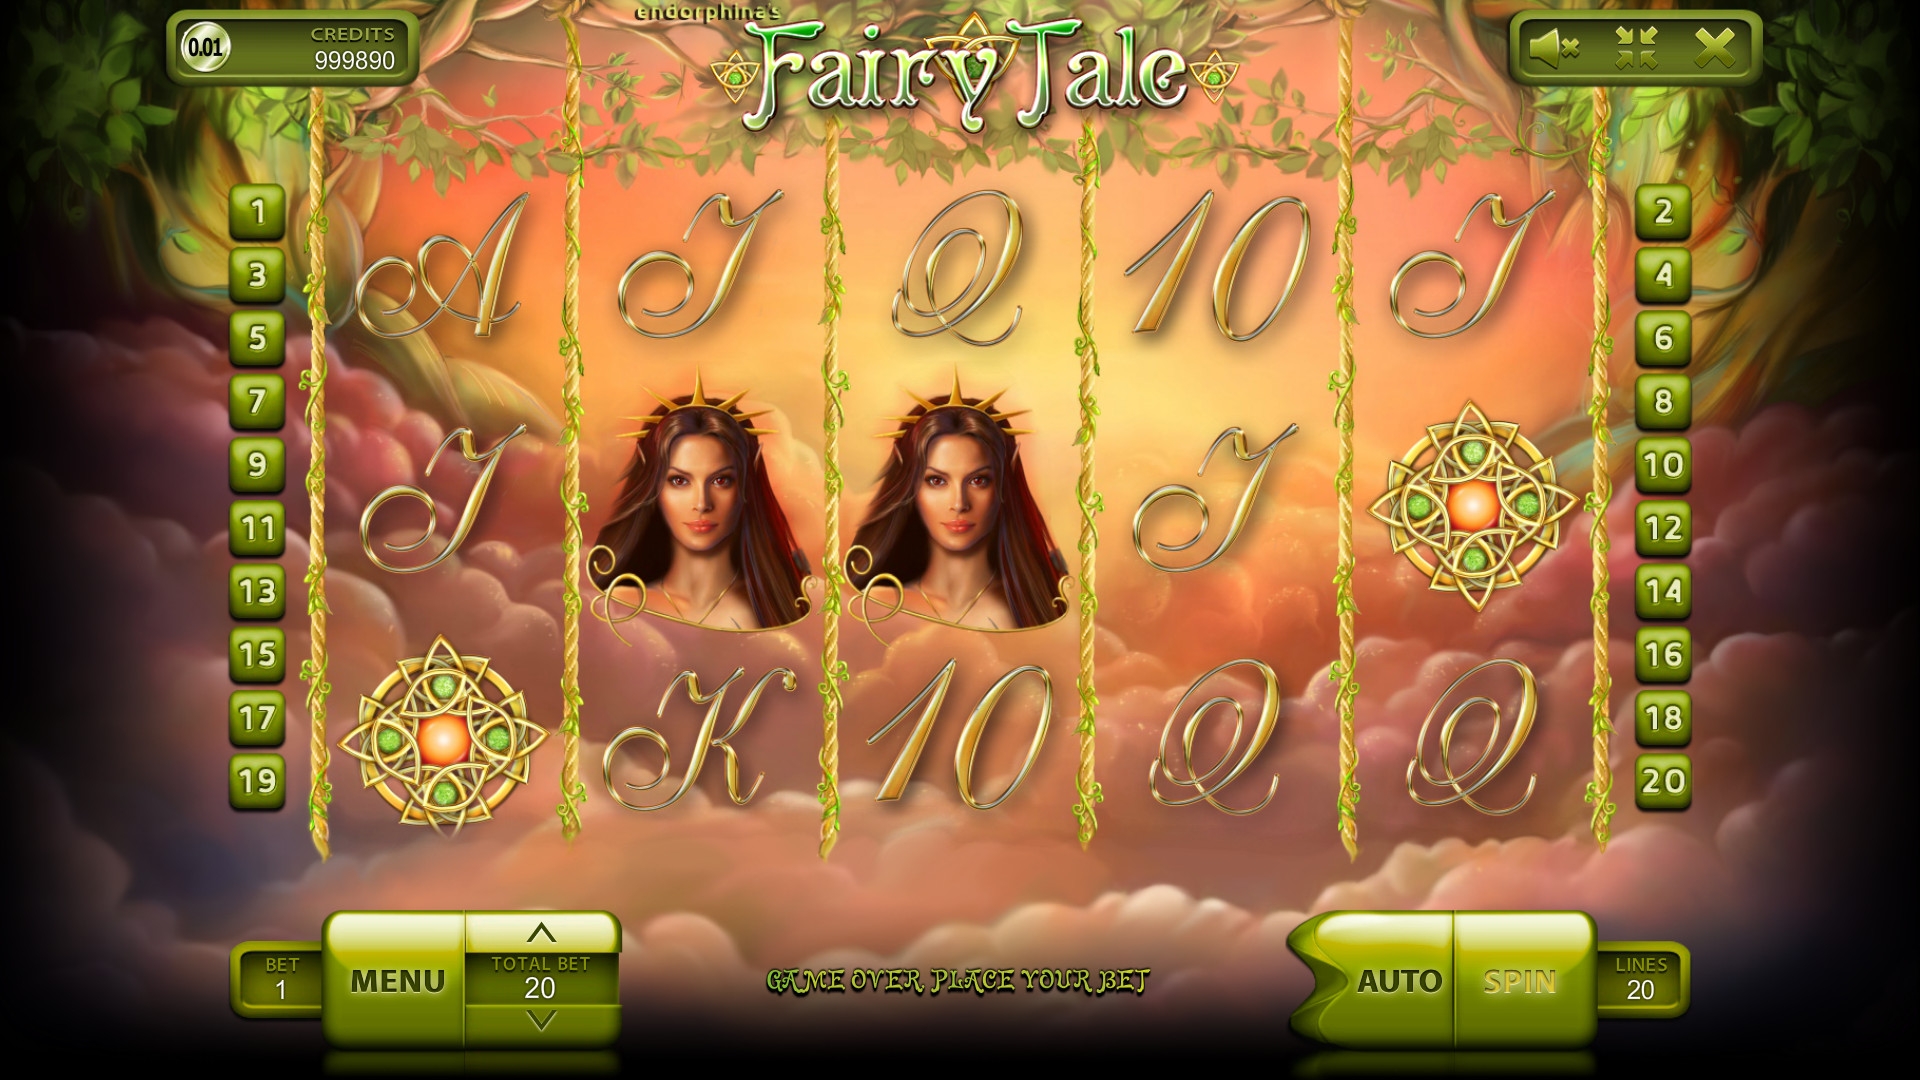 Fairy Tale (Fairy Tale) from category Slots